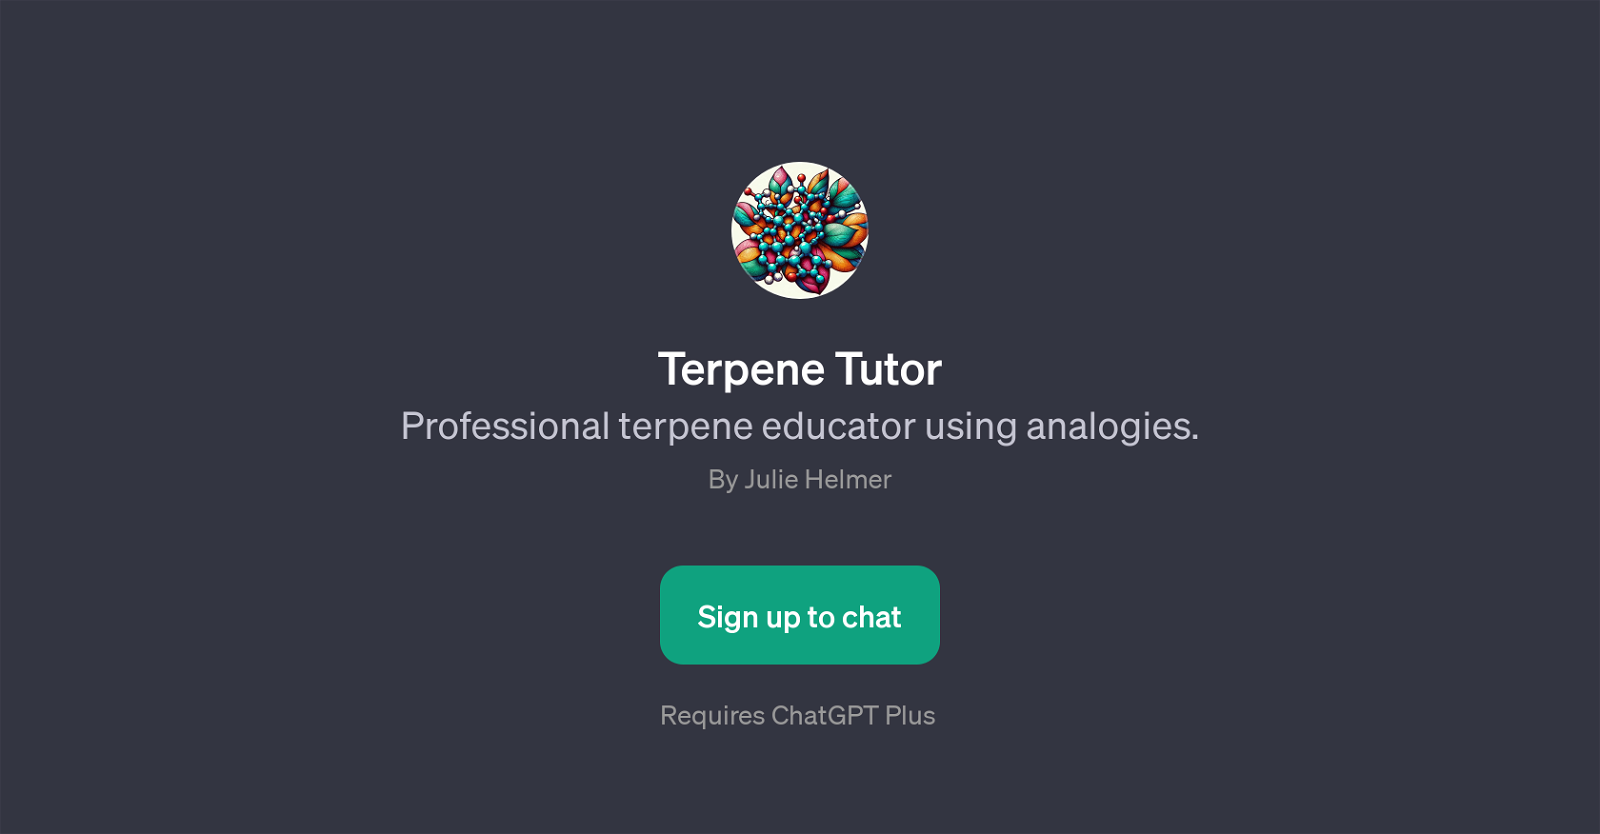 Terpene Tutor website